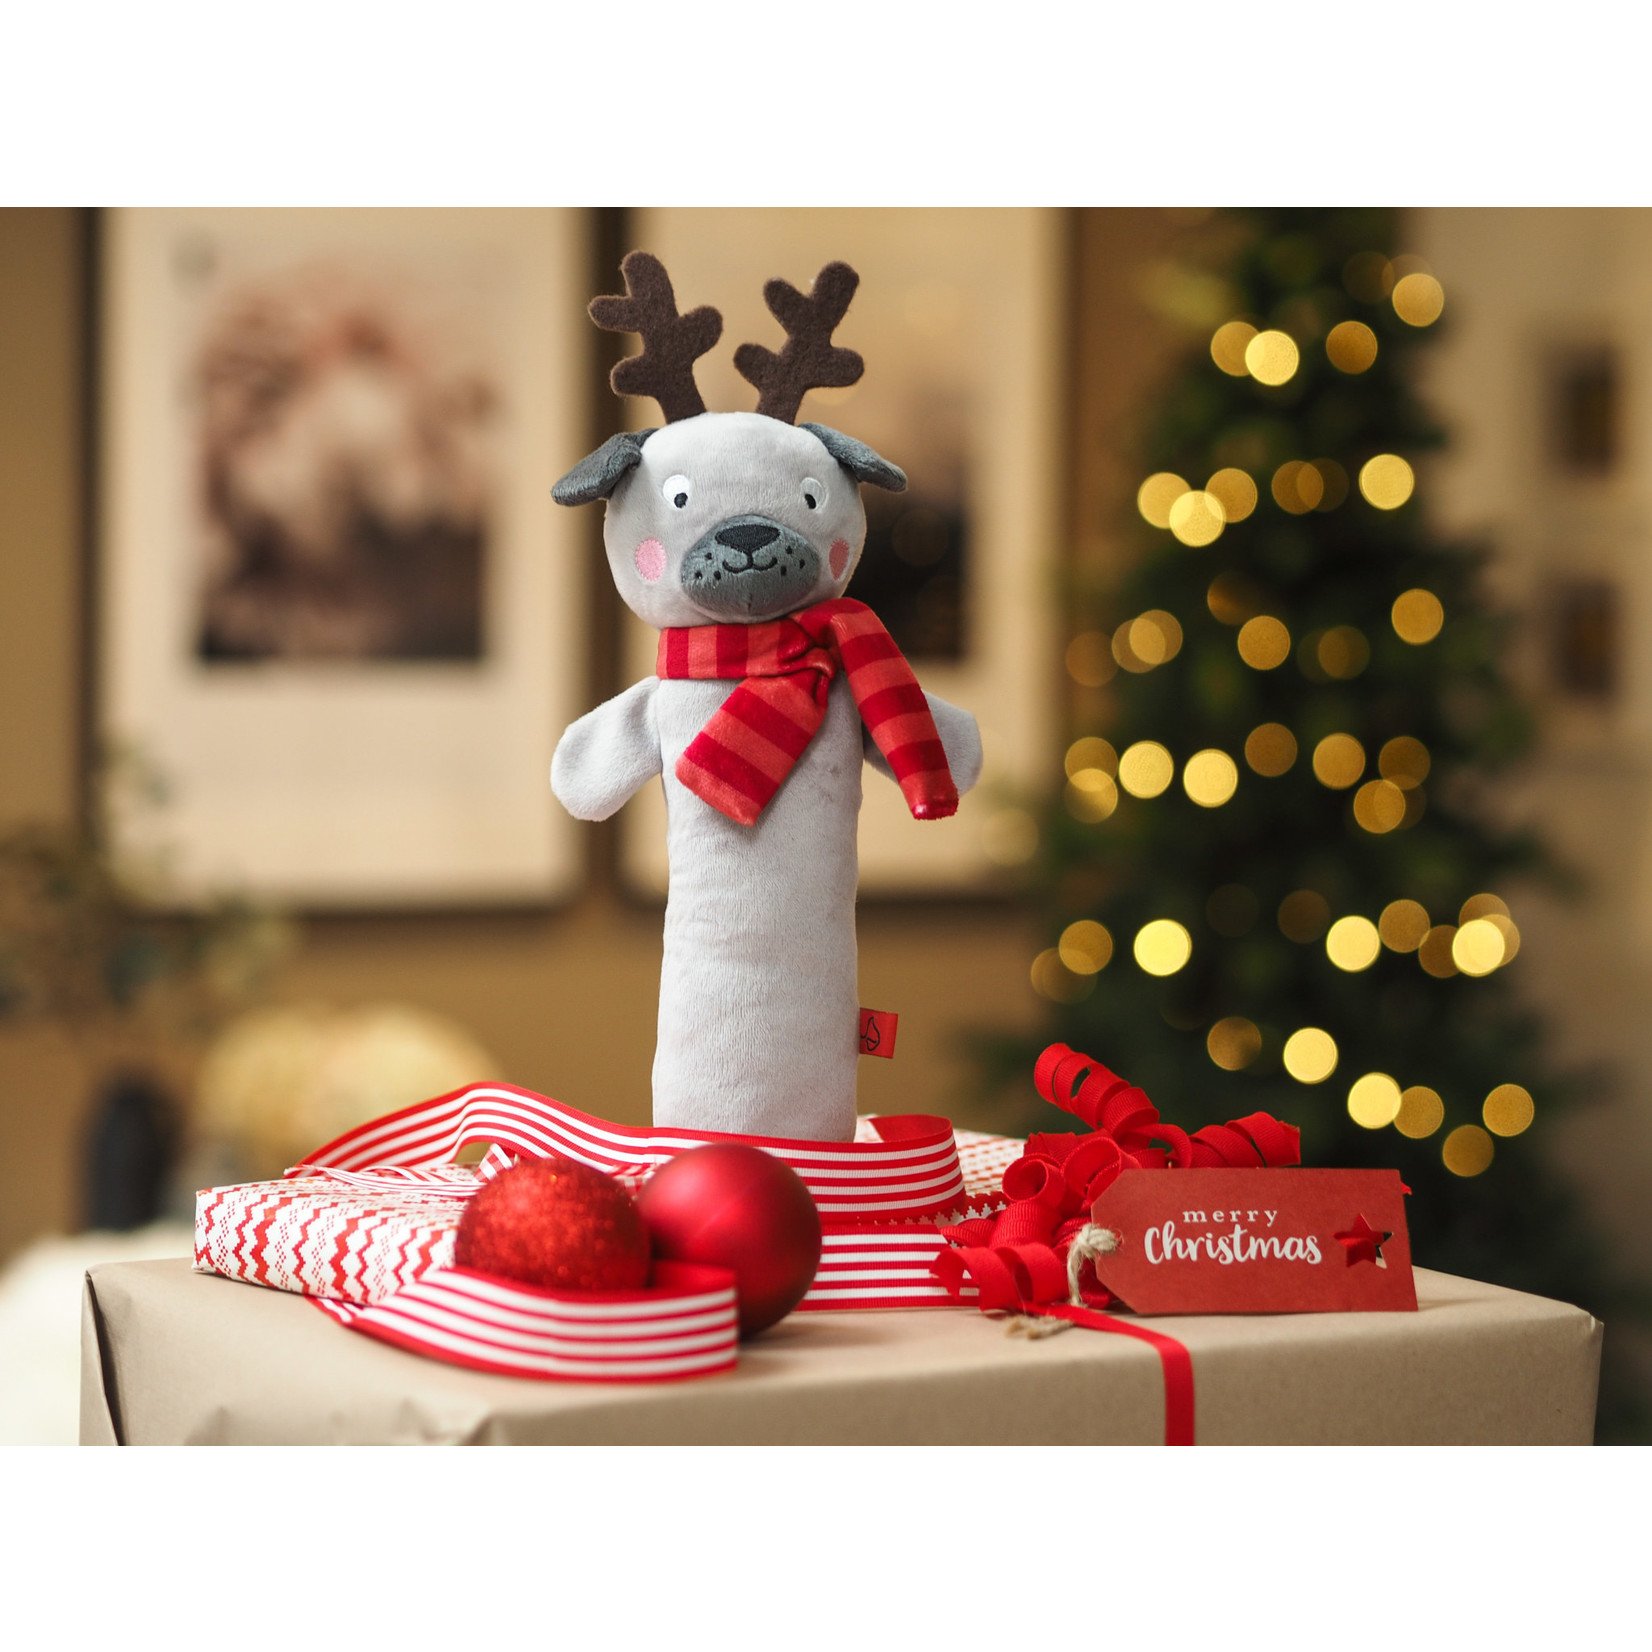 Zöon Christmas Plush Sausage Squeaker Dog Toy, Assorted